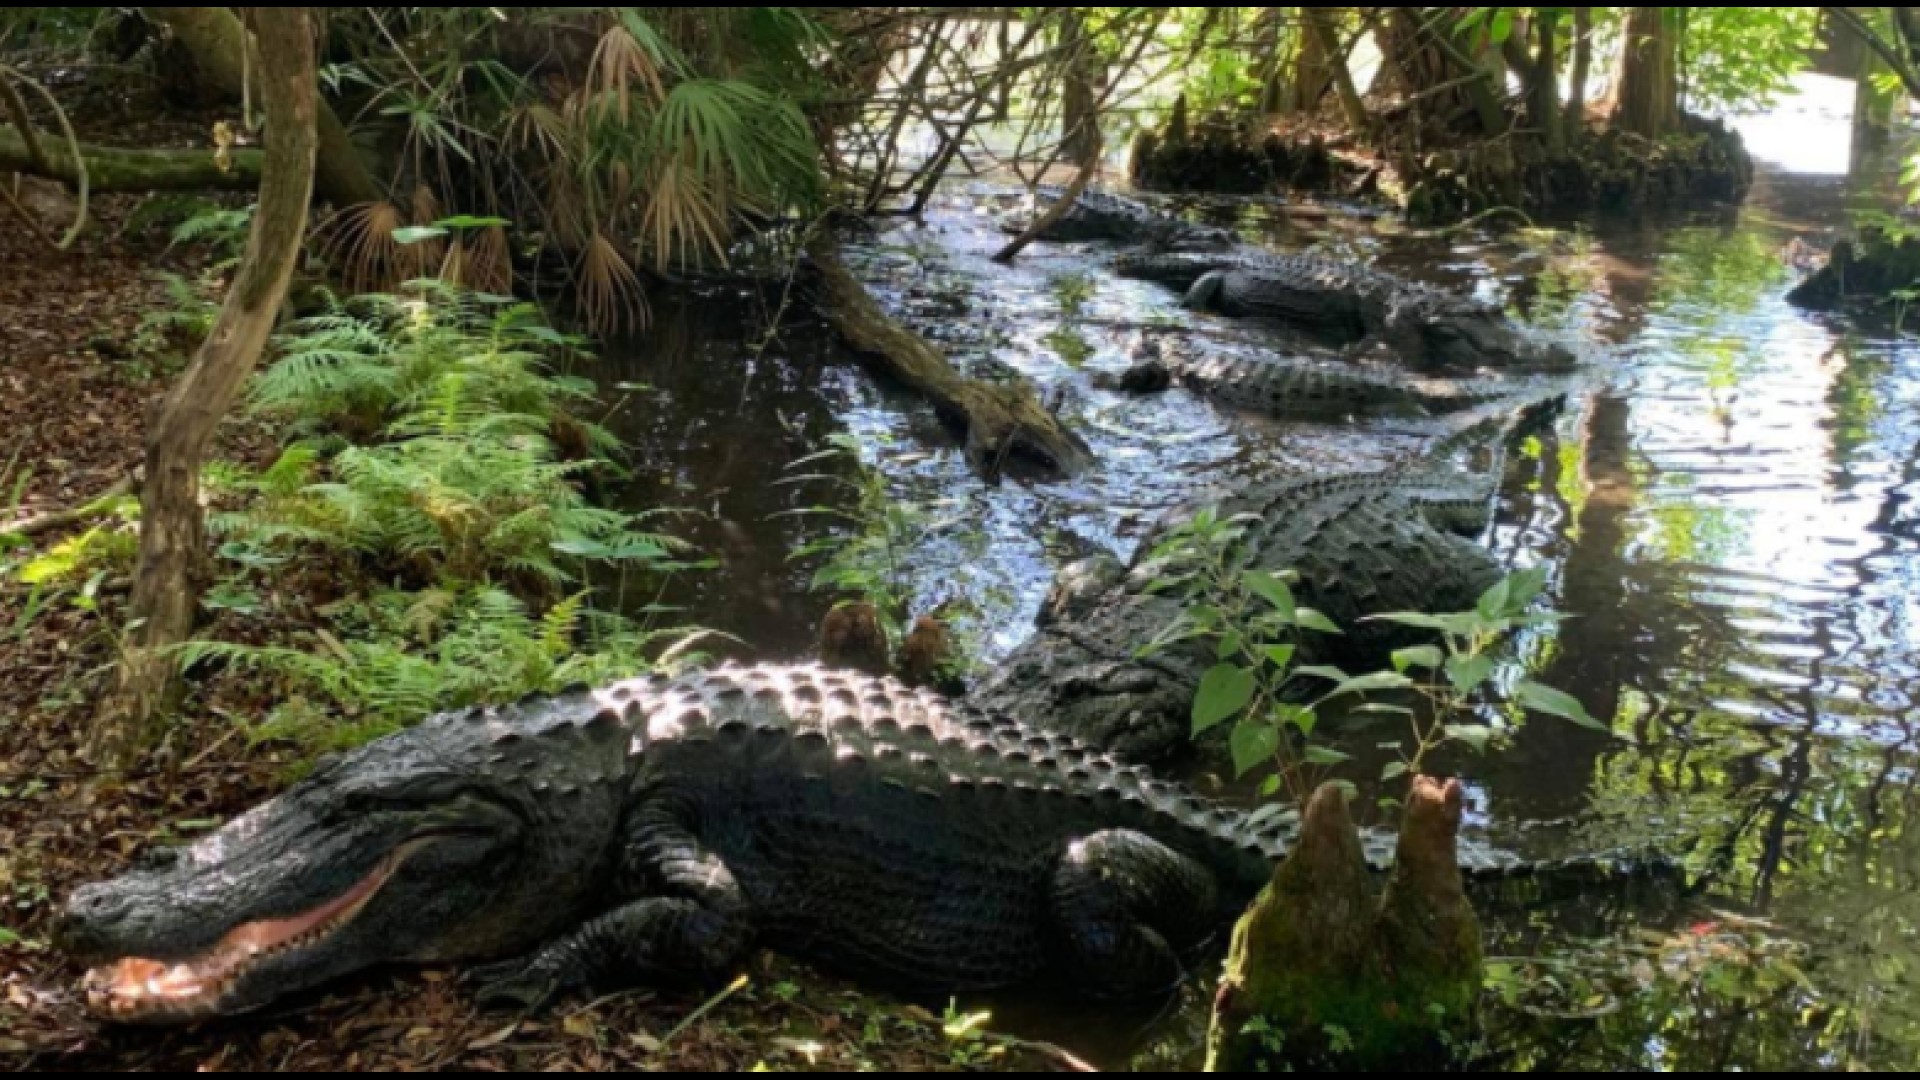 Alligator swamp